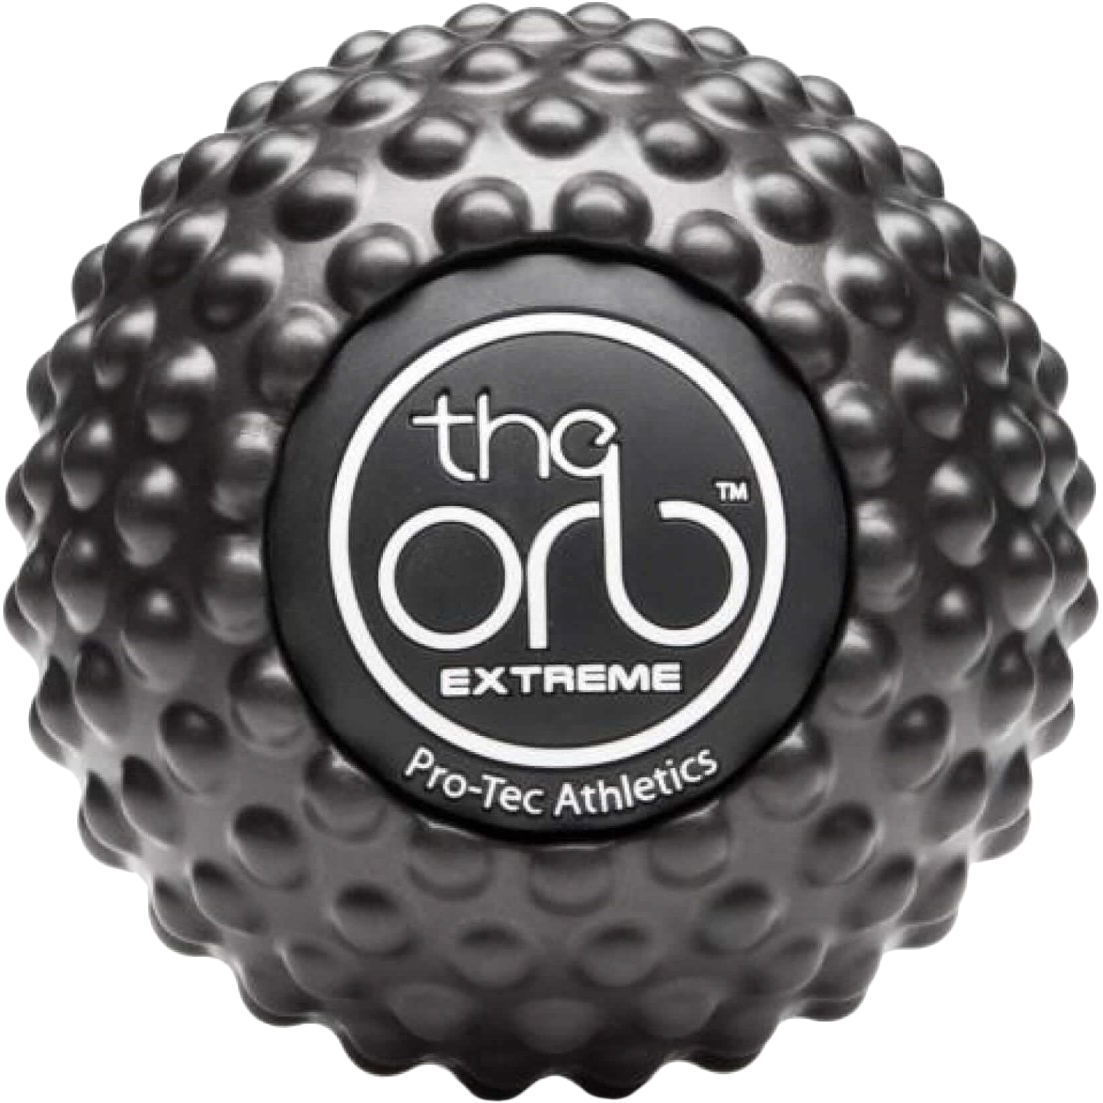 Orb Extreme Massage Ball 4.5